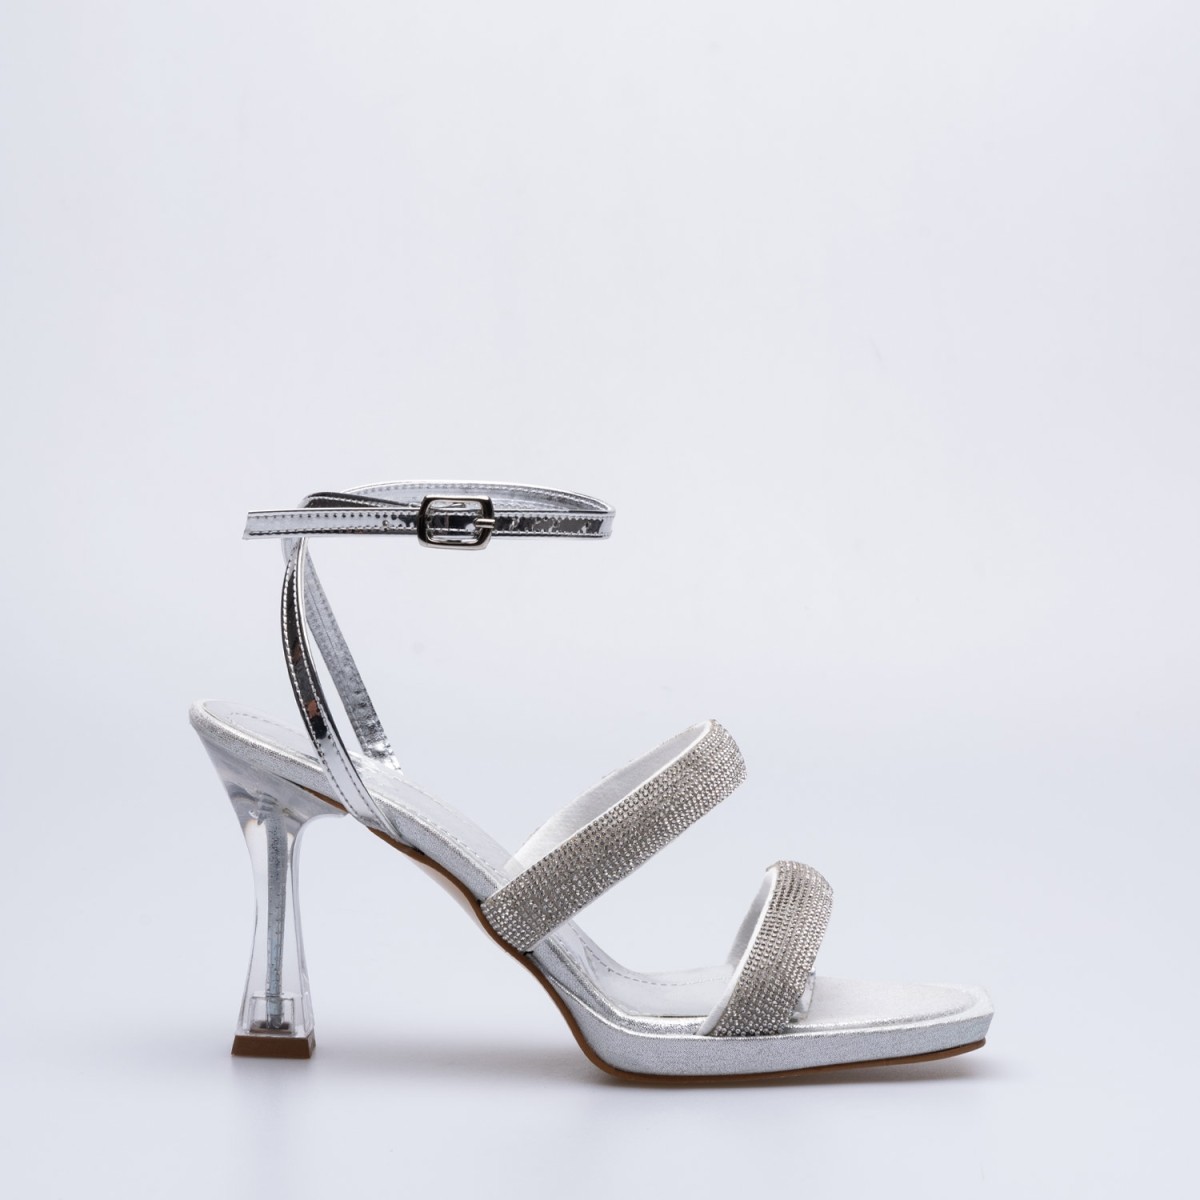 Afra Tekstil Taşlı Platform Topuklu Ayakkabı Gümüş